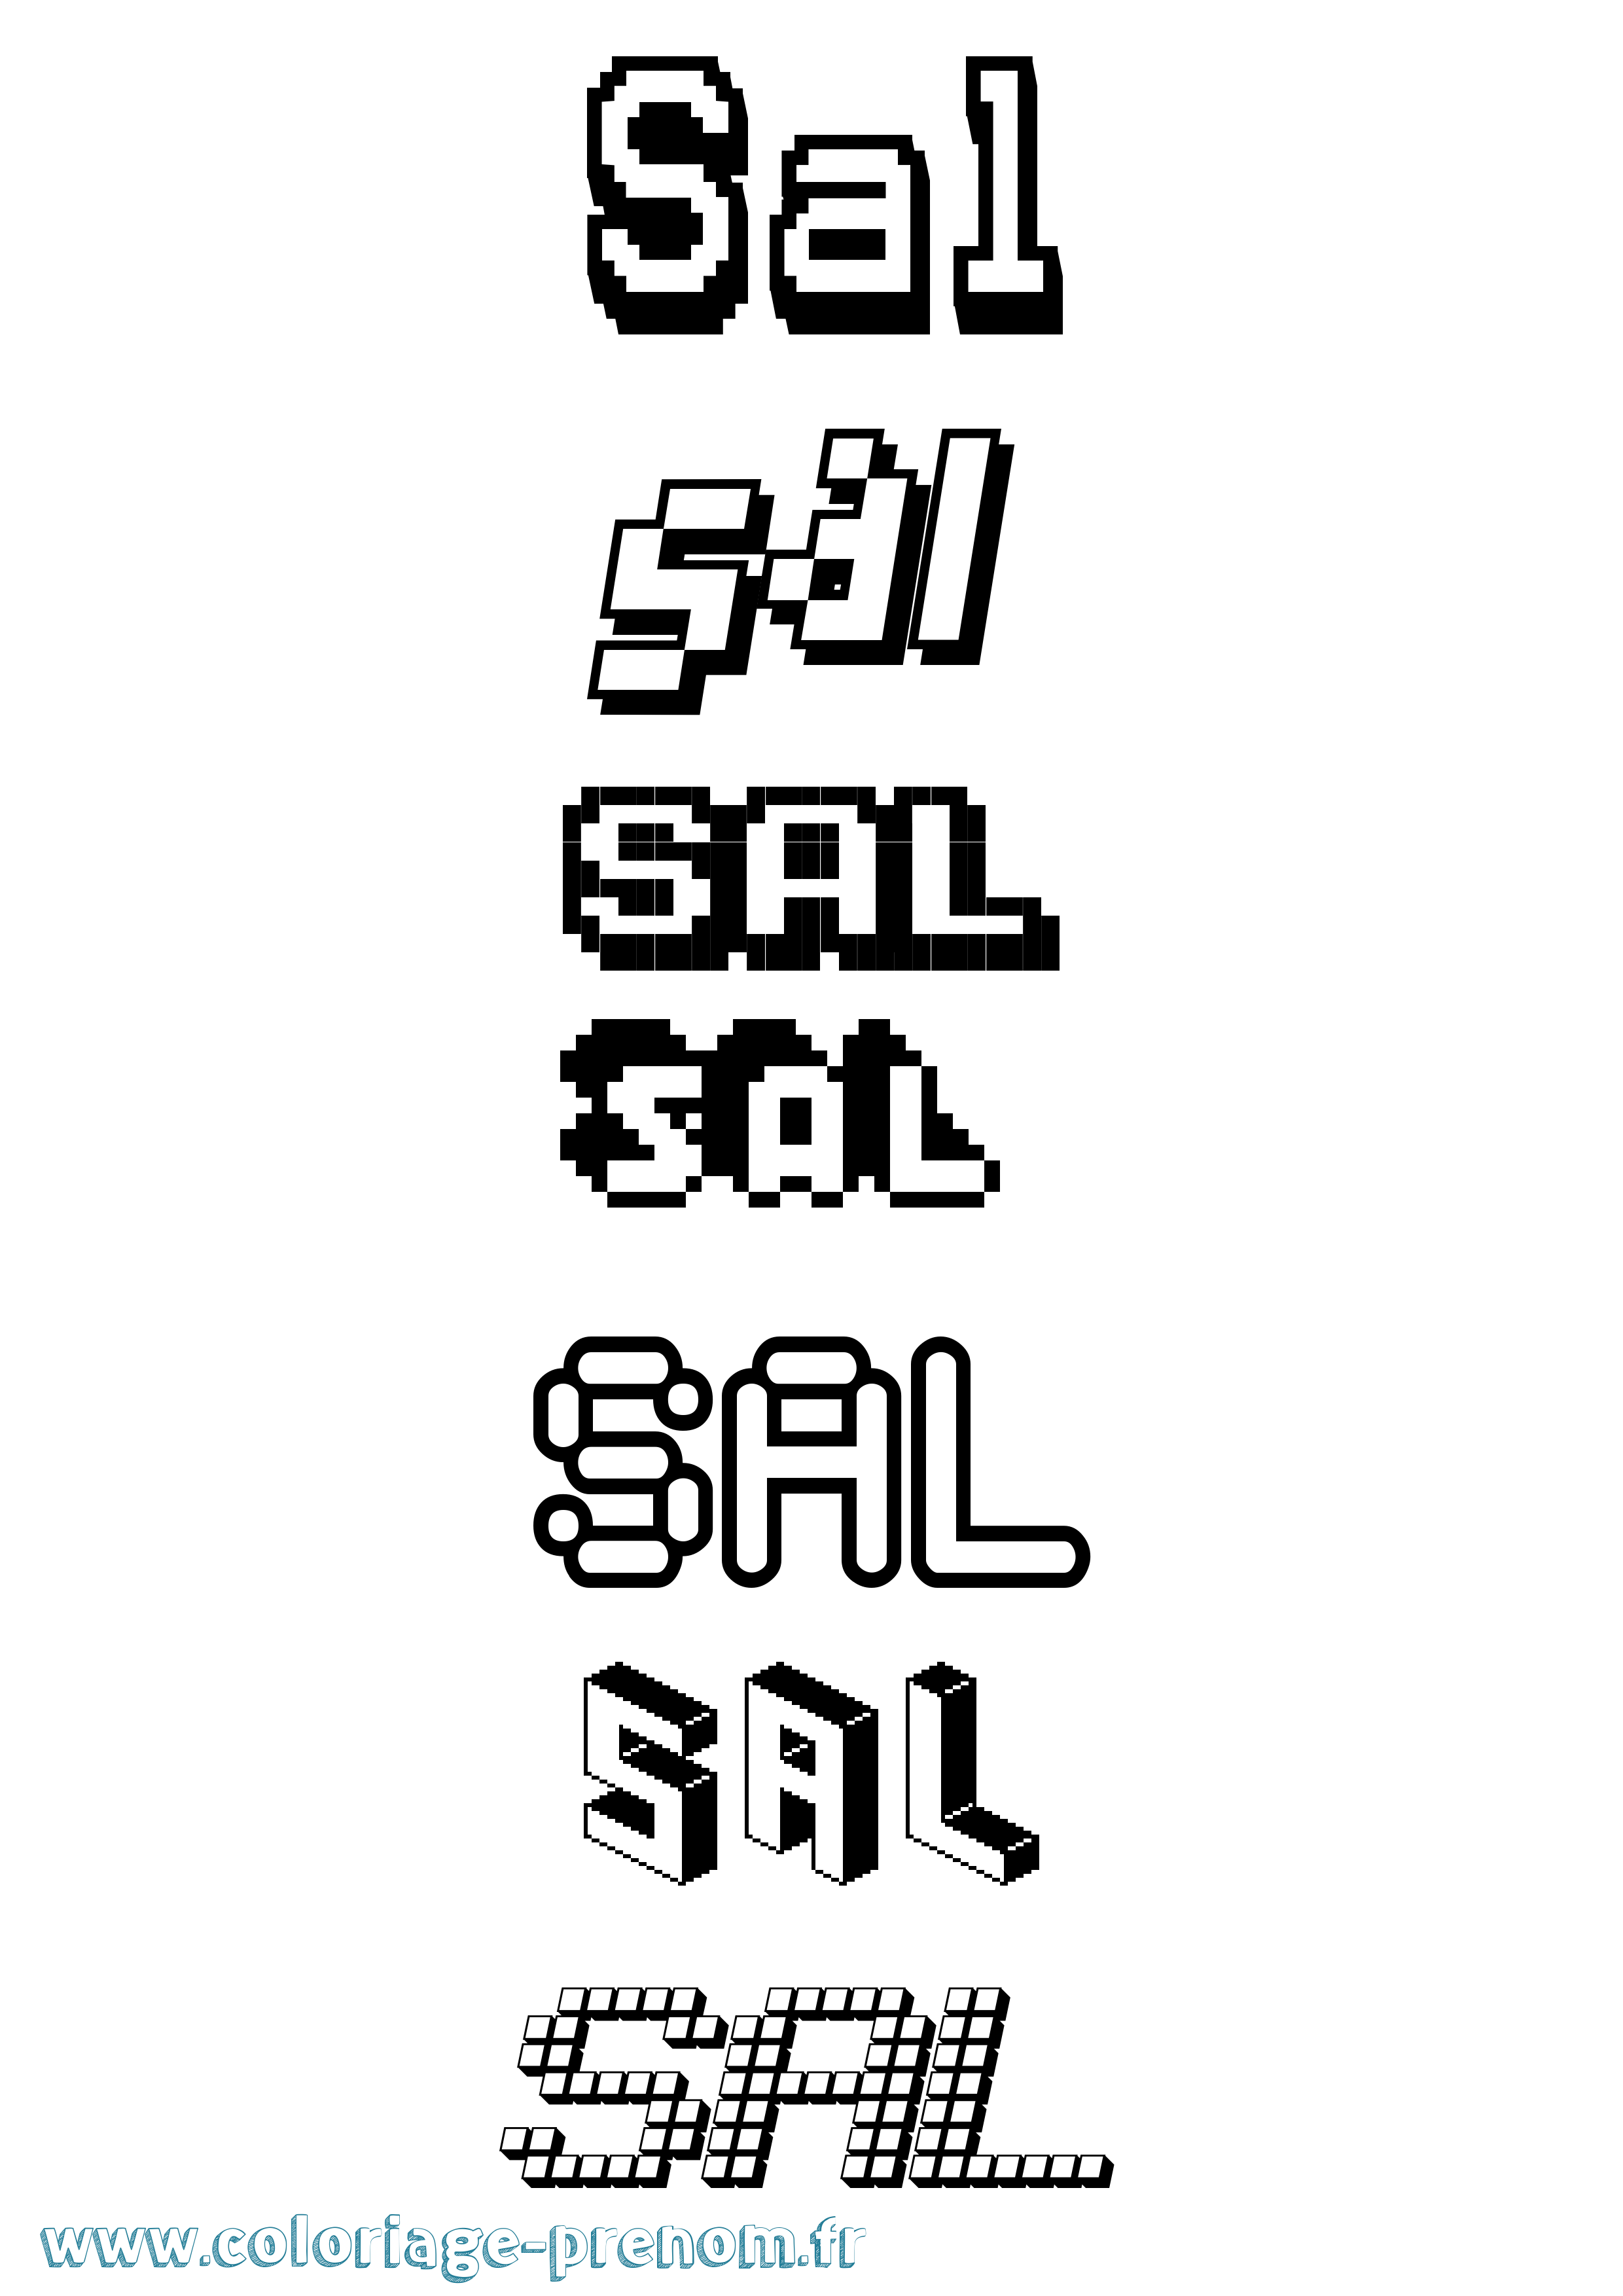 Coloriage prénom Sal Pixel